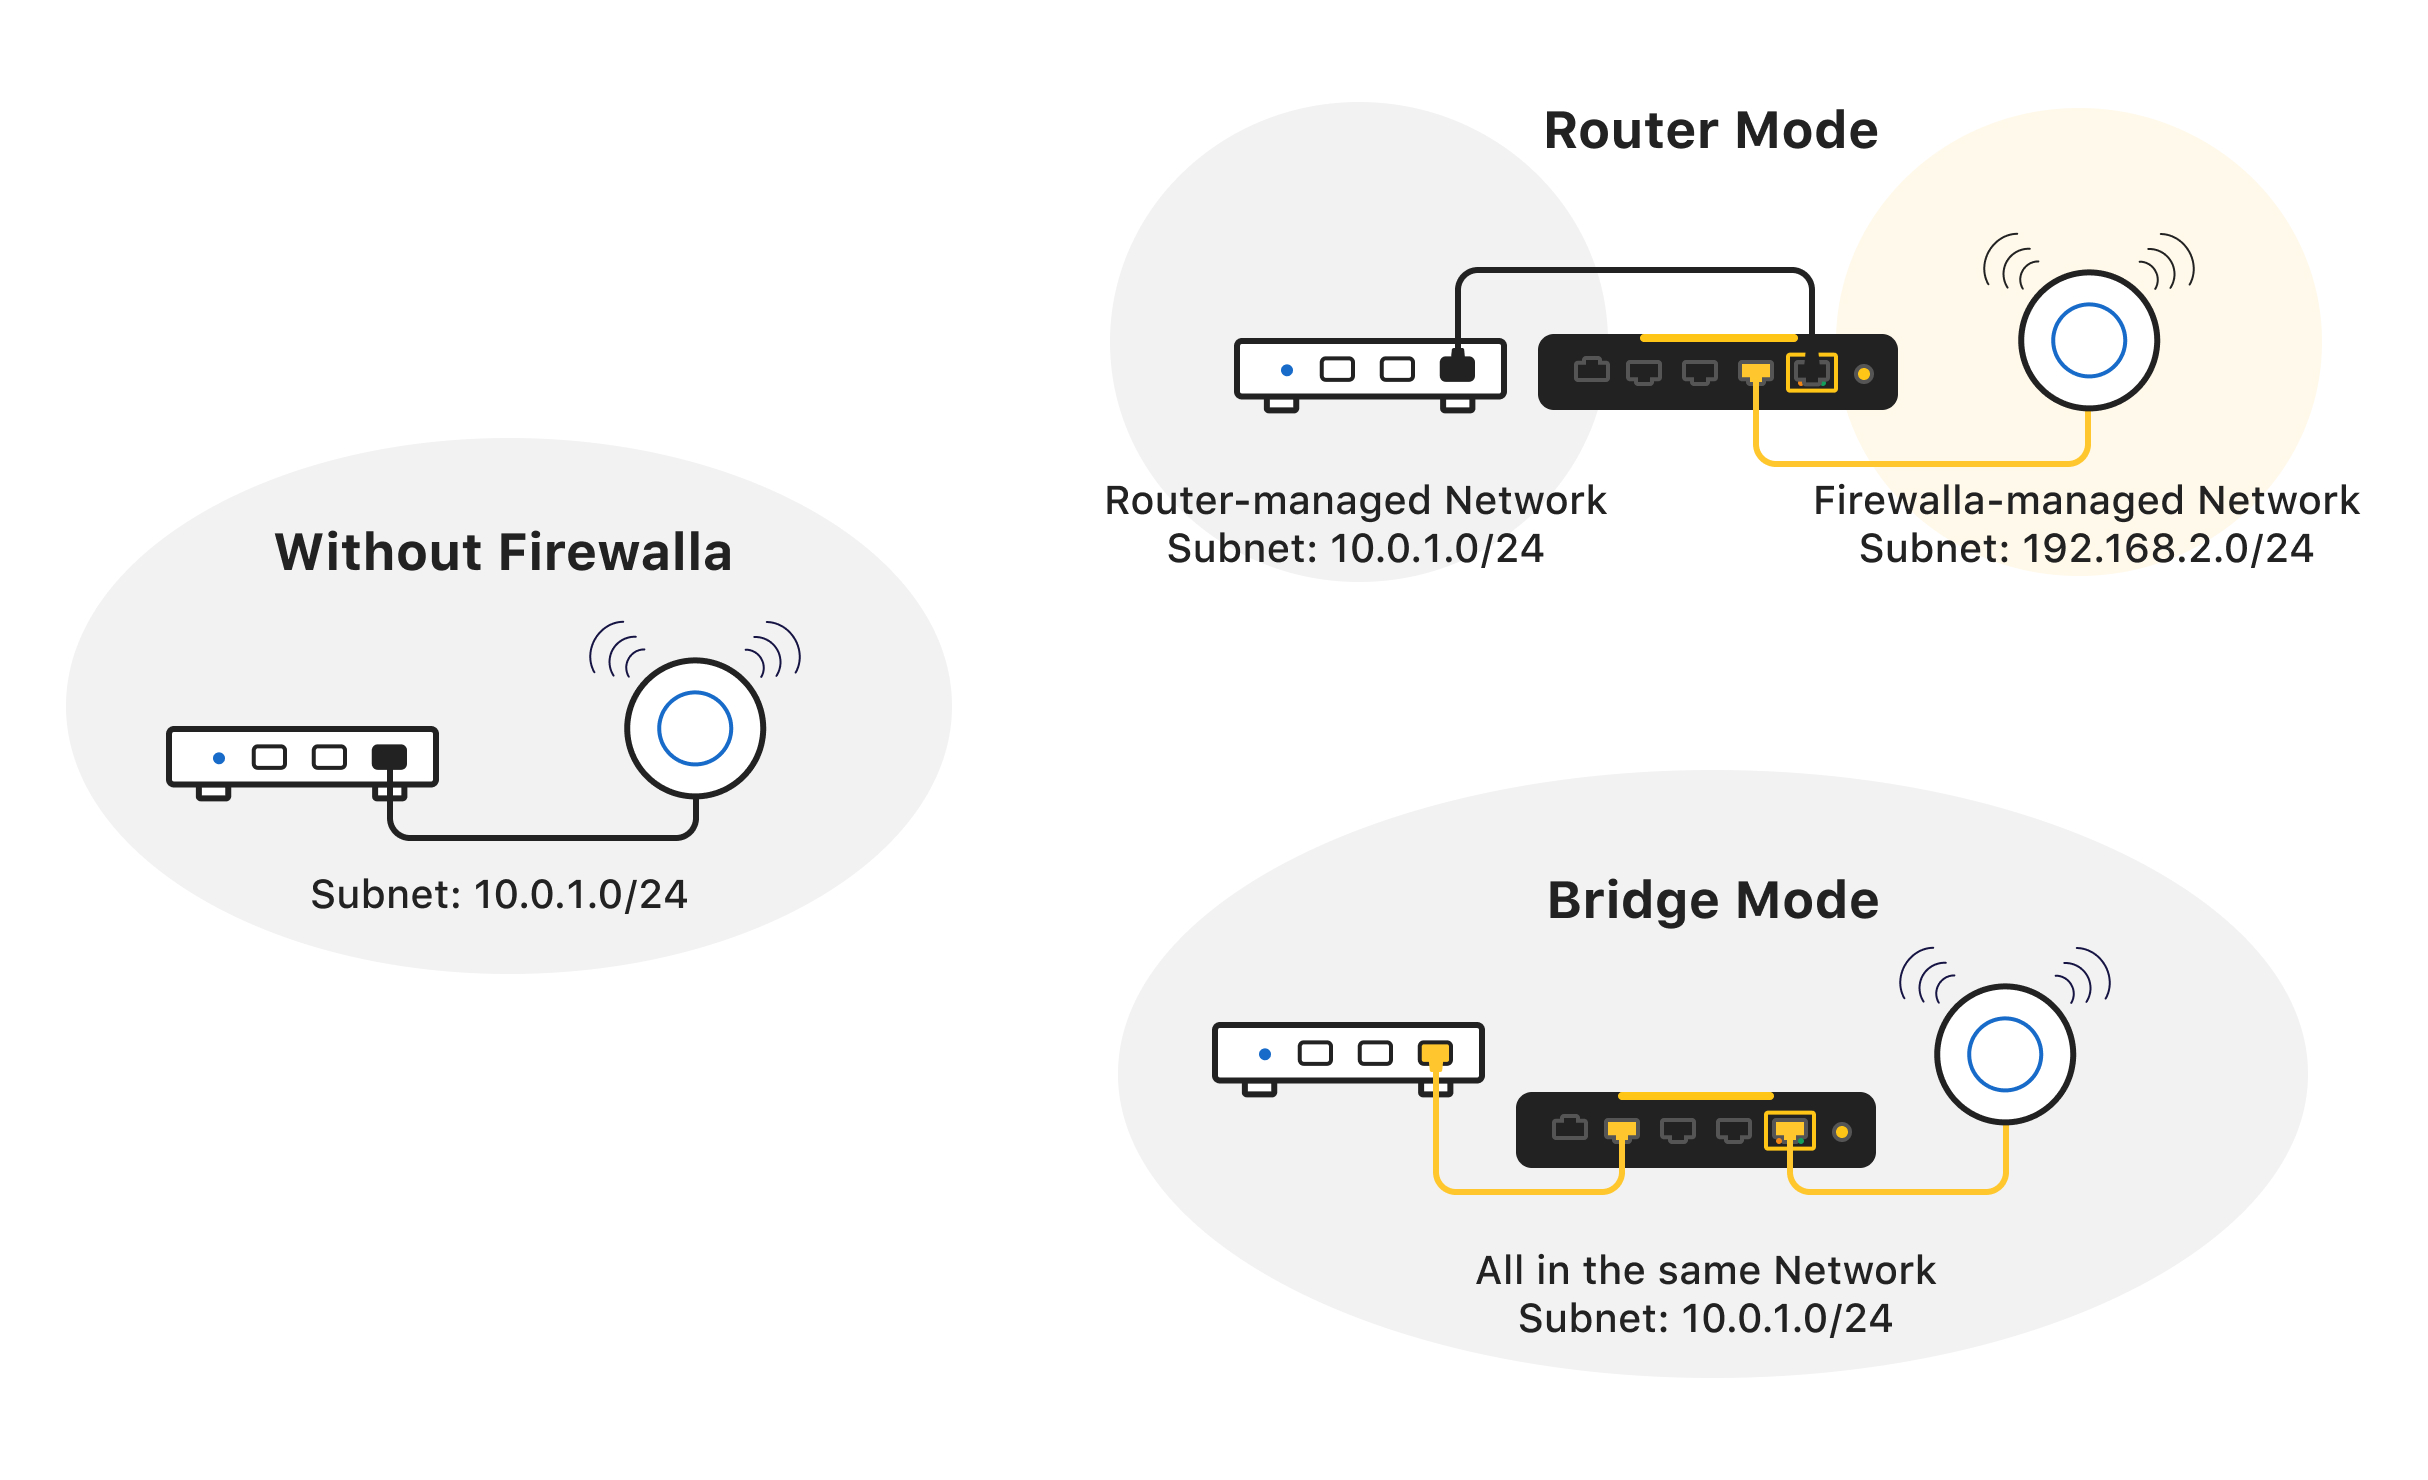 Firewalla: Bridge Mode Firewalla